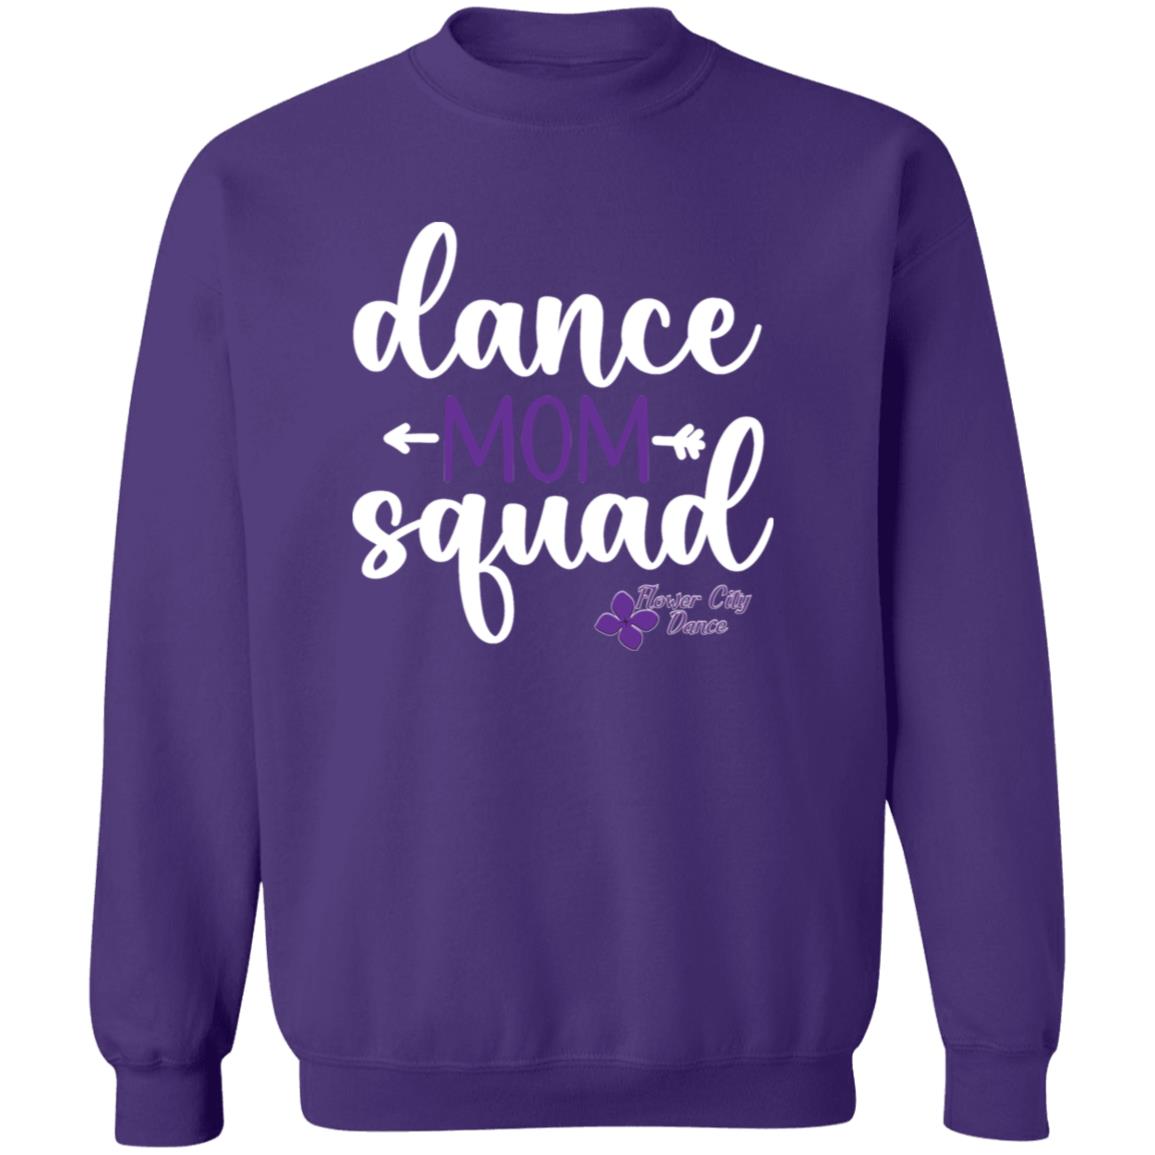 FCD Dance Mom Crewneck Pullover Sweatshirt